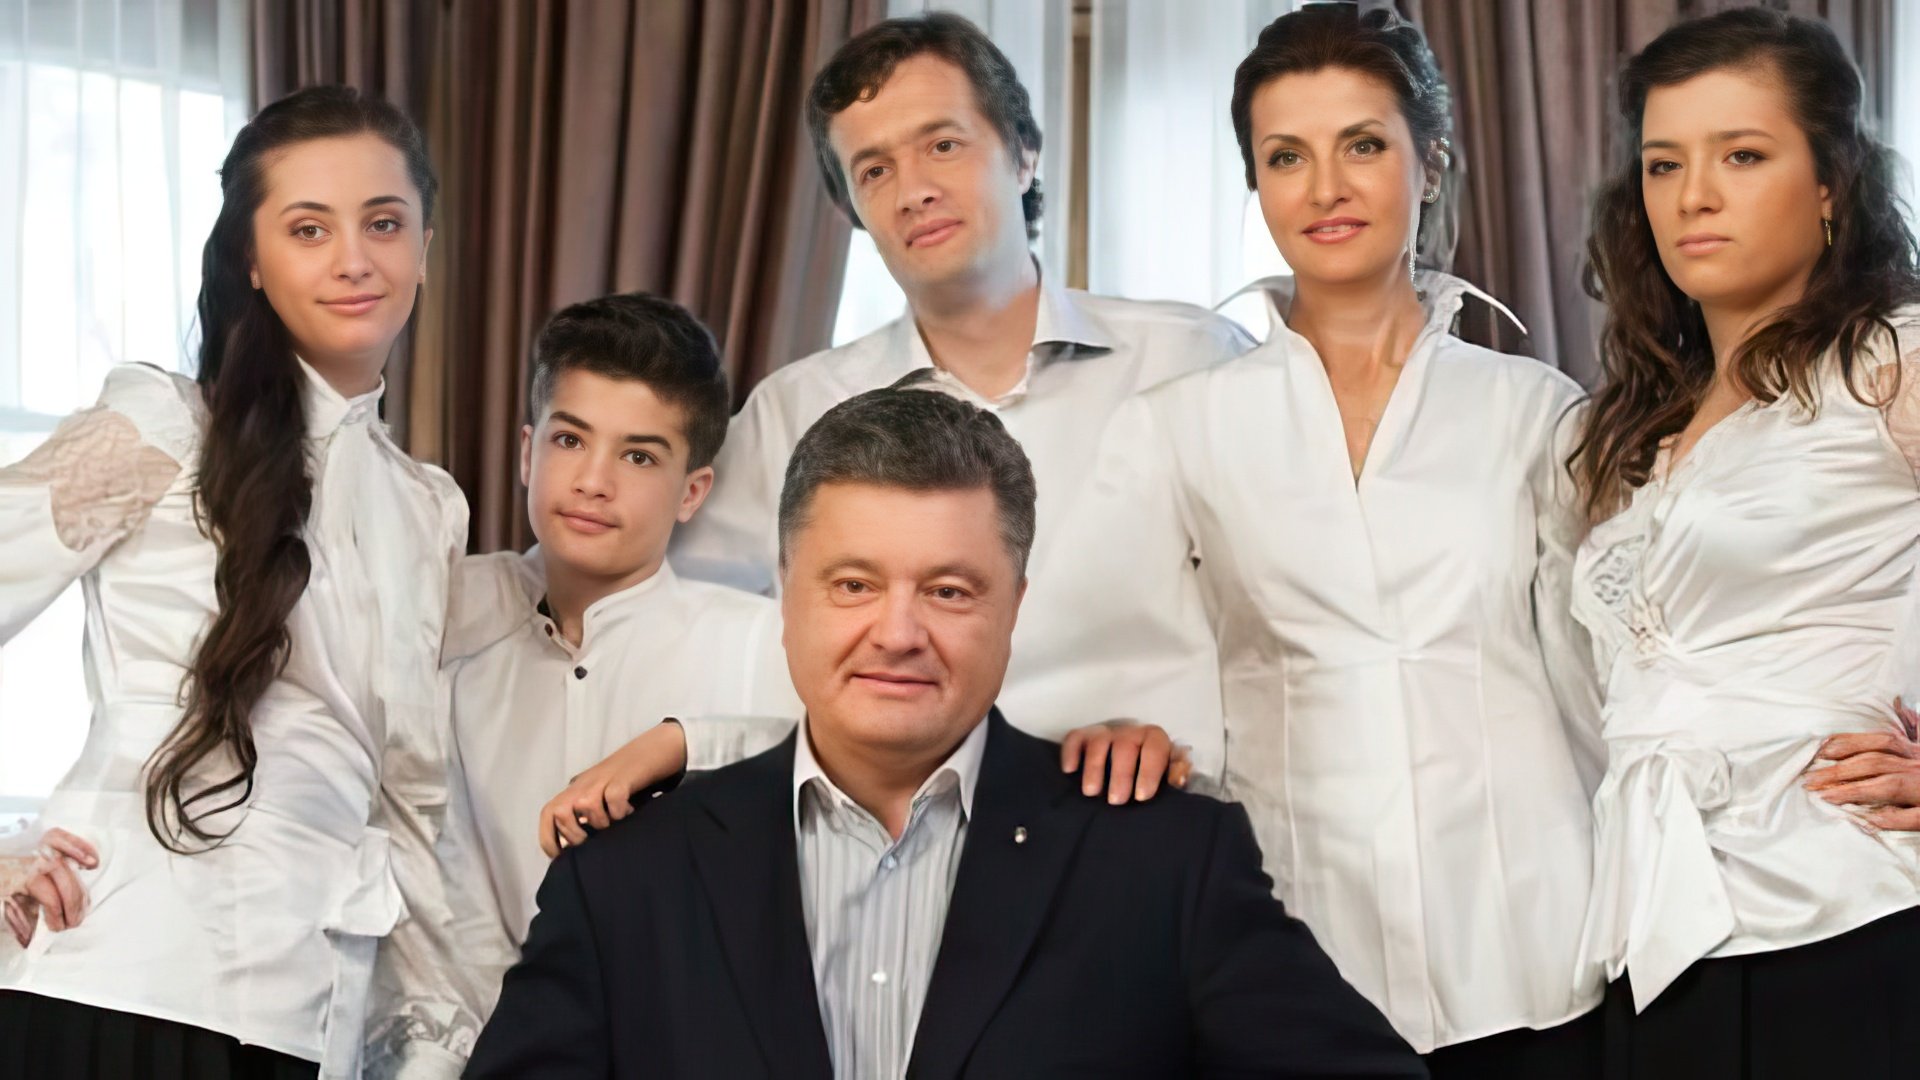 Poroshenko with his wife and children